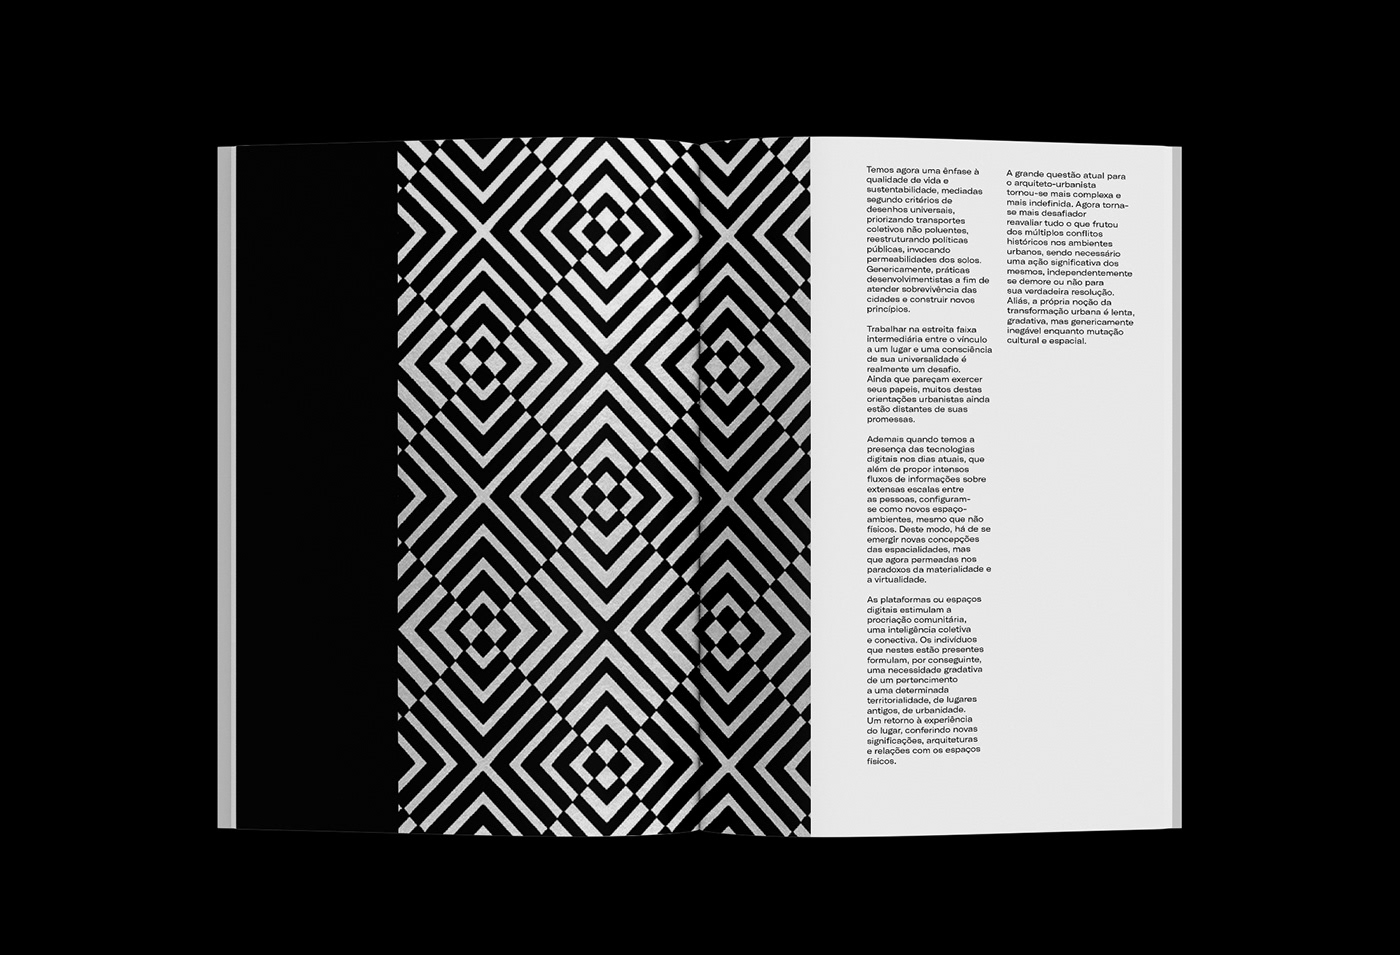 jazz branding  graphicdesign architecture urbanism   typography   Advertising  editorial editorialdesign festival